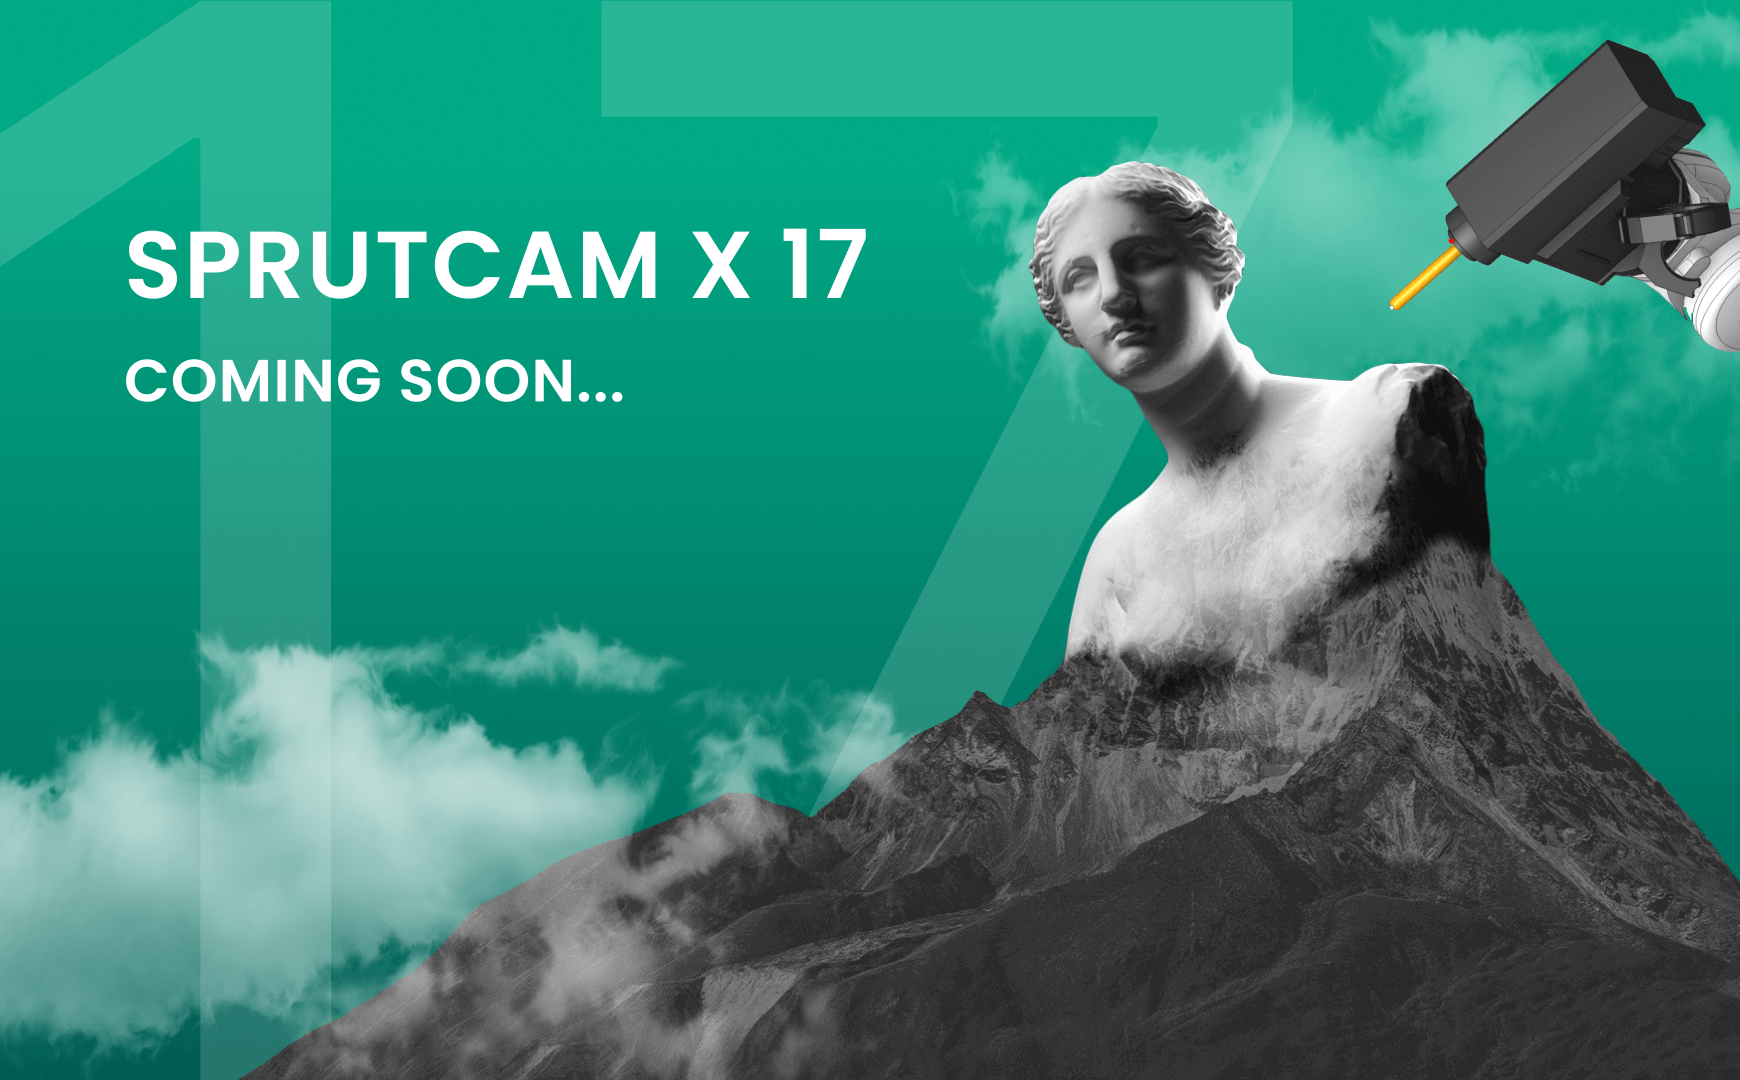 SprutCAM Tech announces the upcoming release of SprutCAM X 17 | SprutCAM X